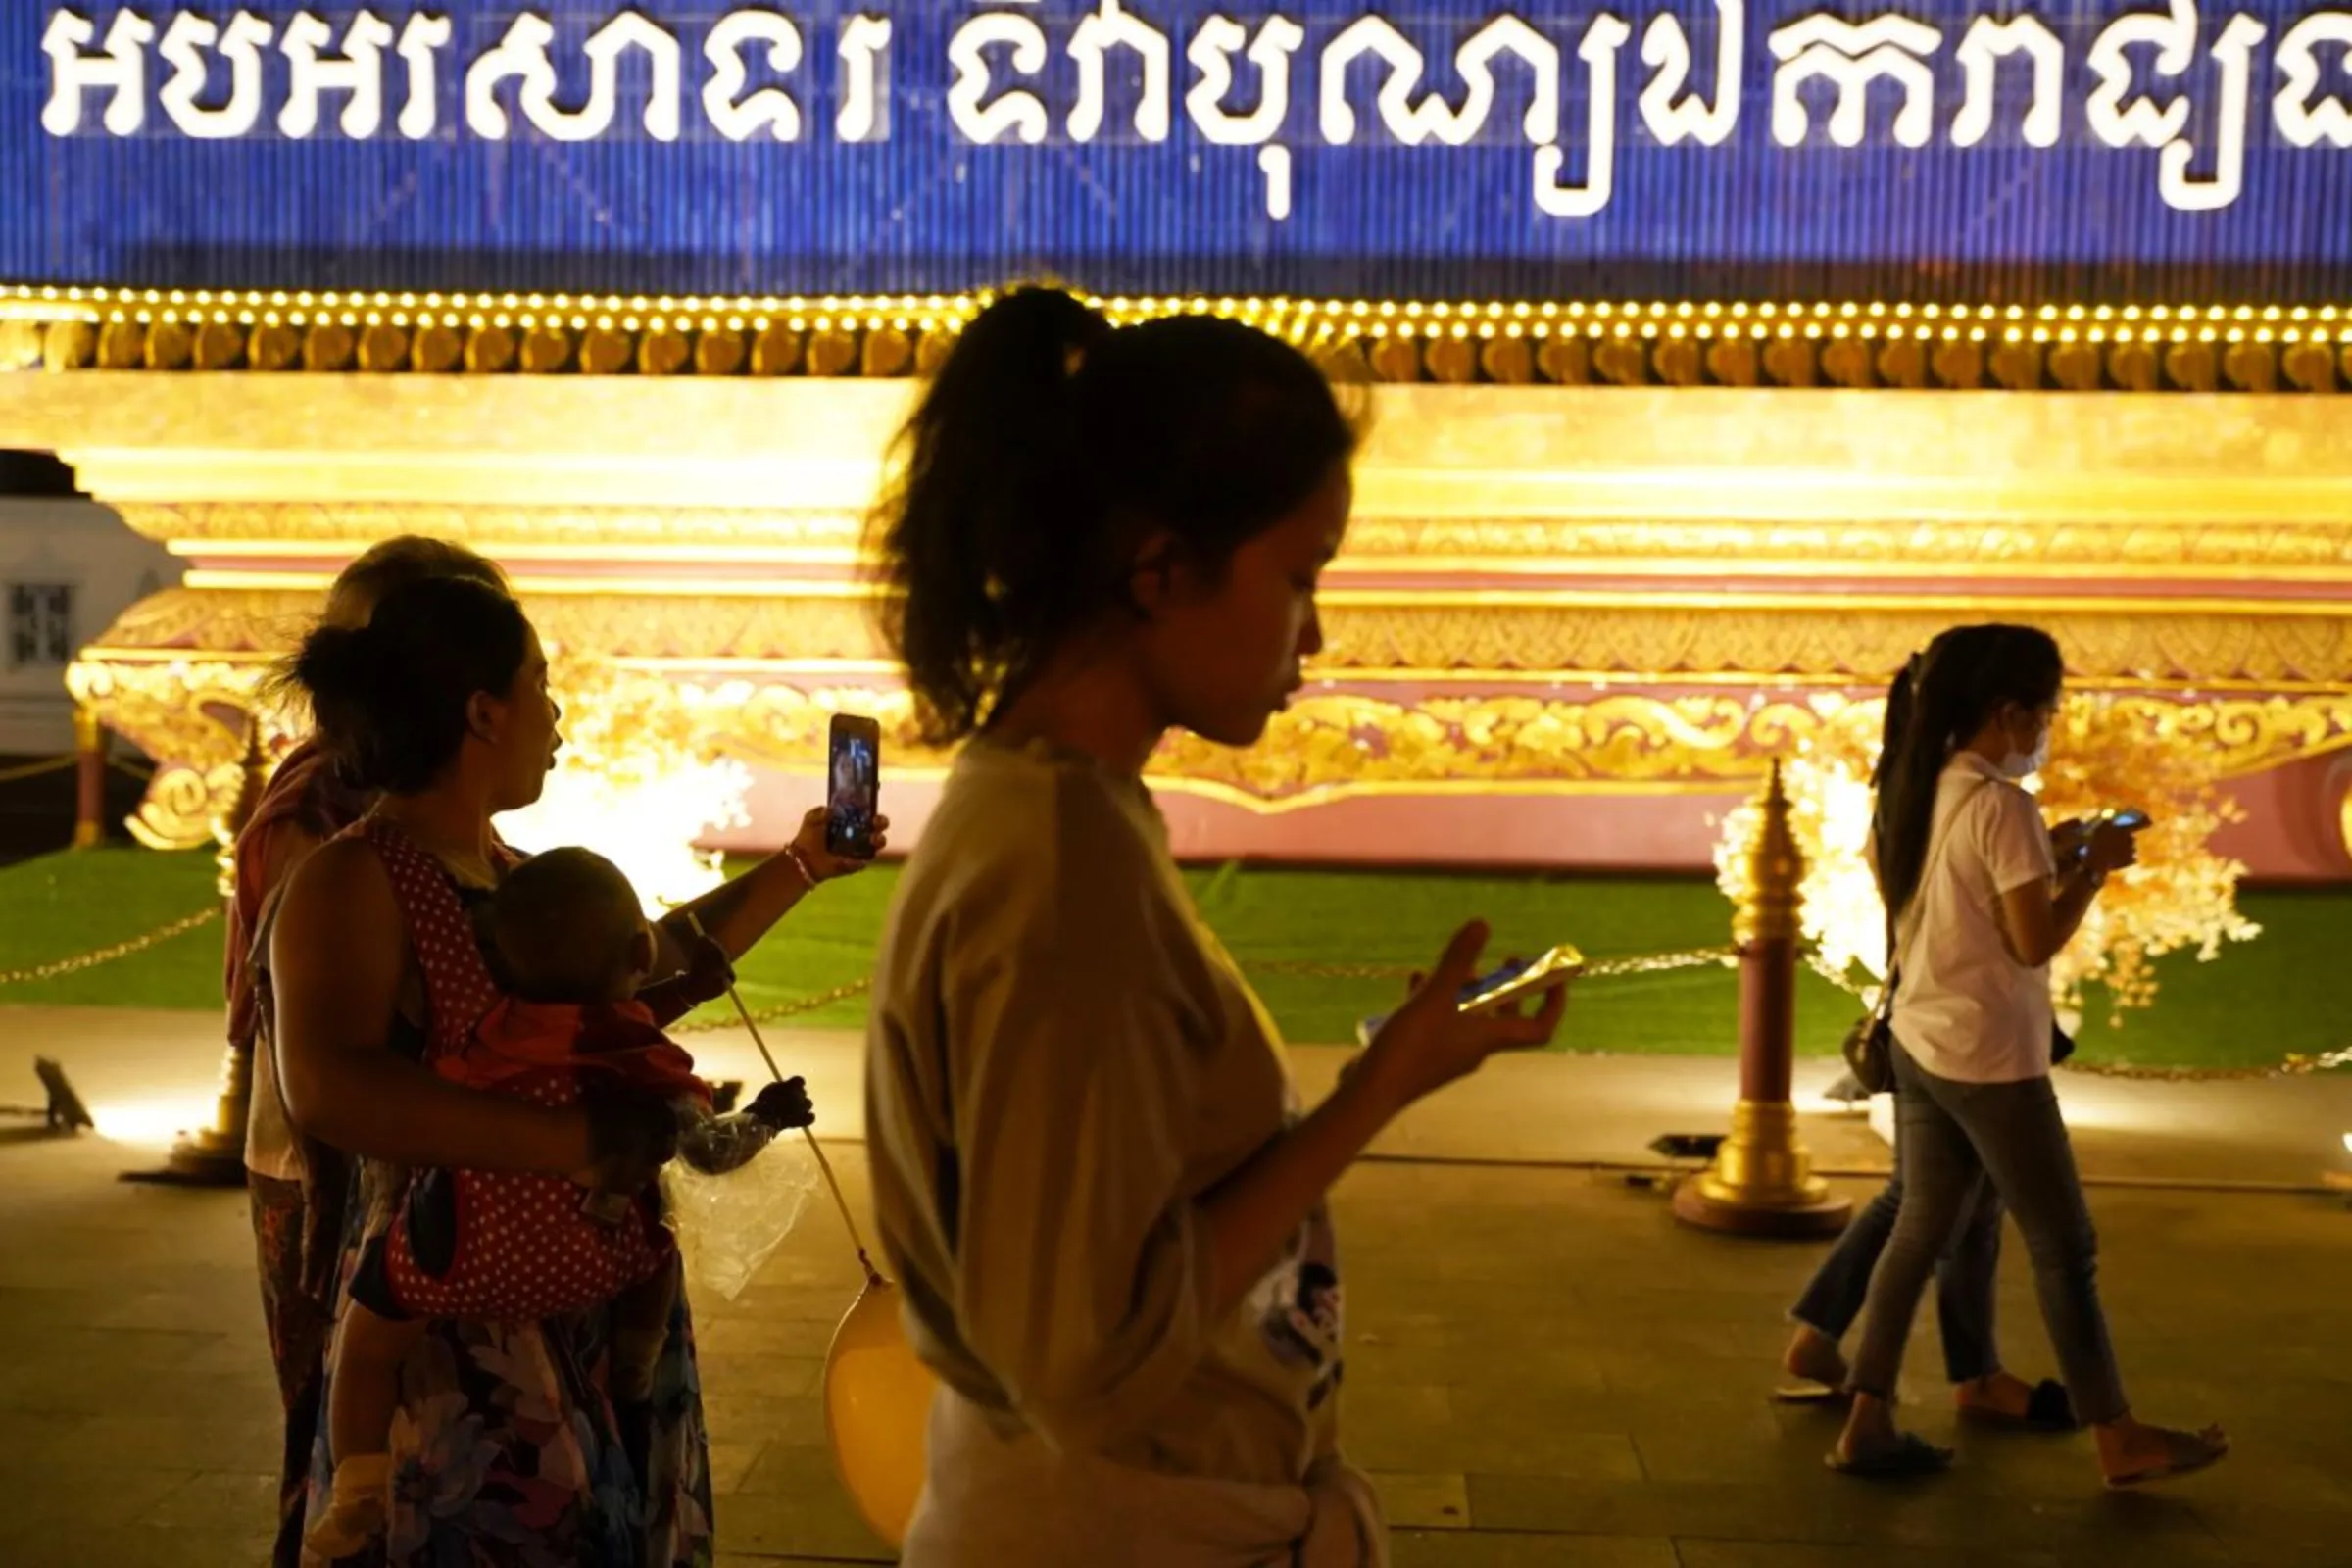 People walk using their mobiles phones in Phnom Penh, Cambodia, February 18, 2021. REUTERS/Cindy Liu